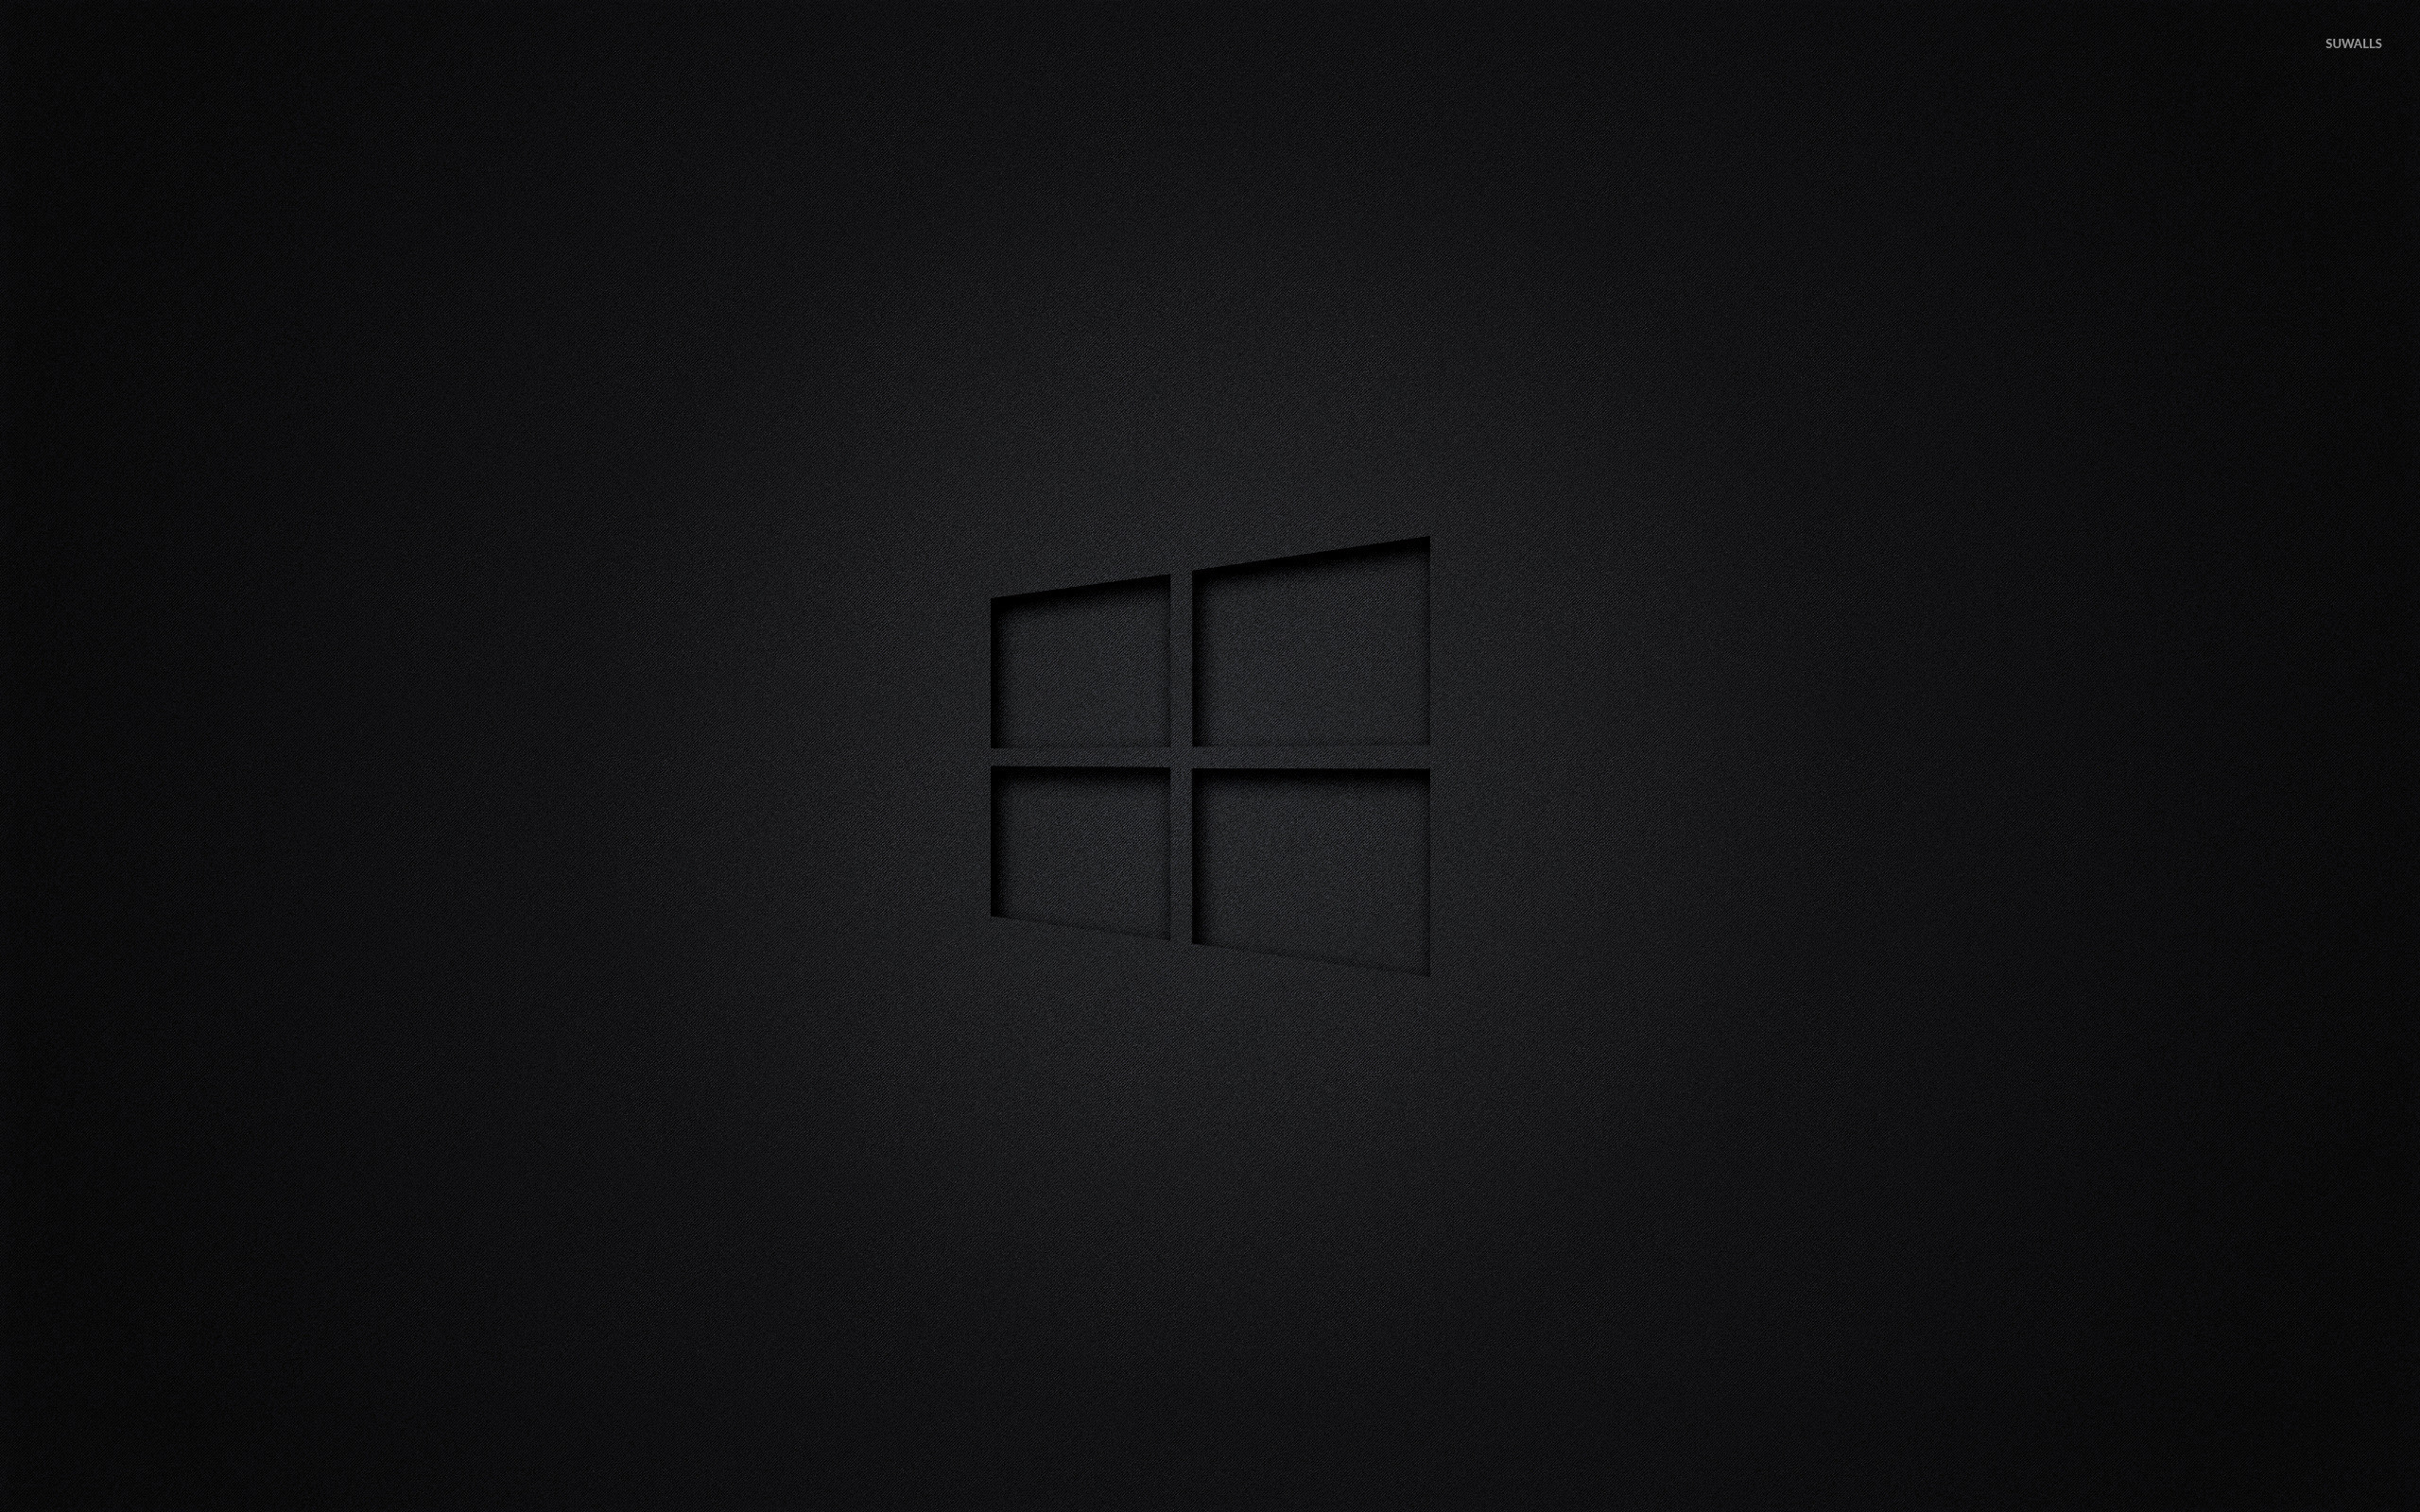 2560x1600 Windows 10 transparent logo on black wallpaper